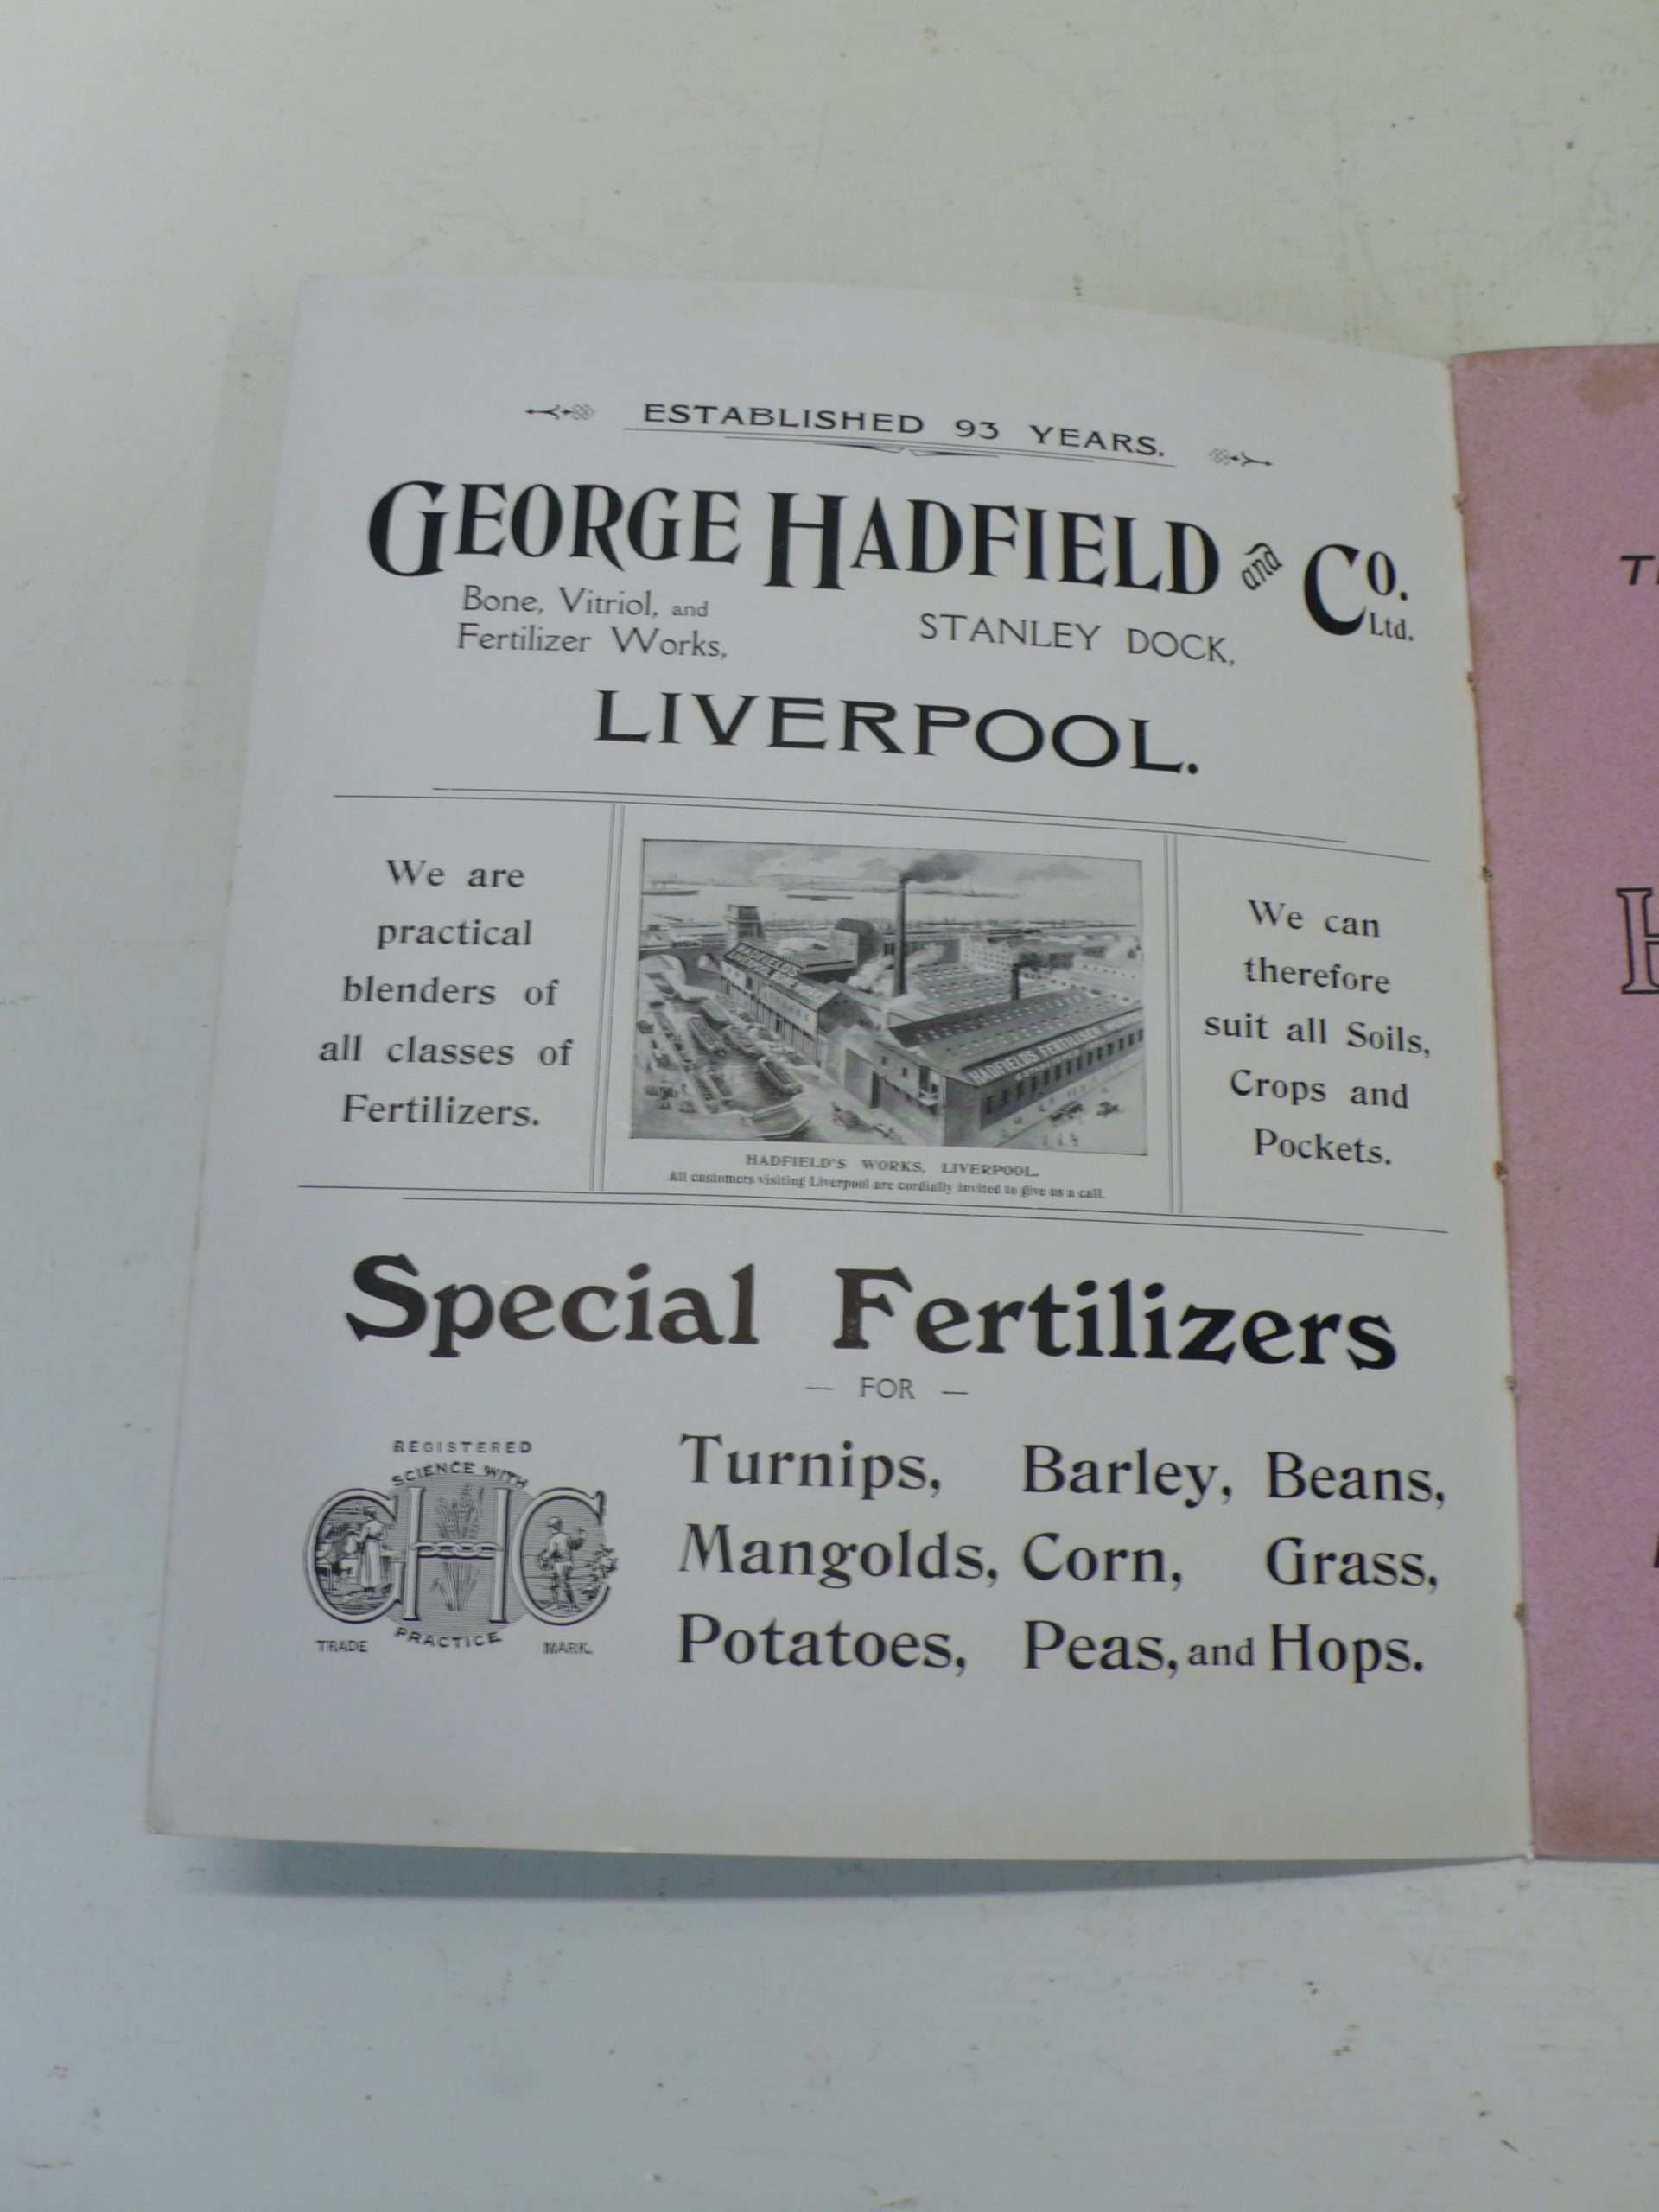 Hadfield Fertiliser Blotter Pad